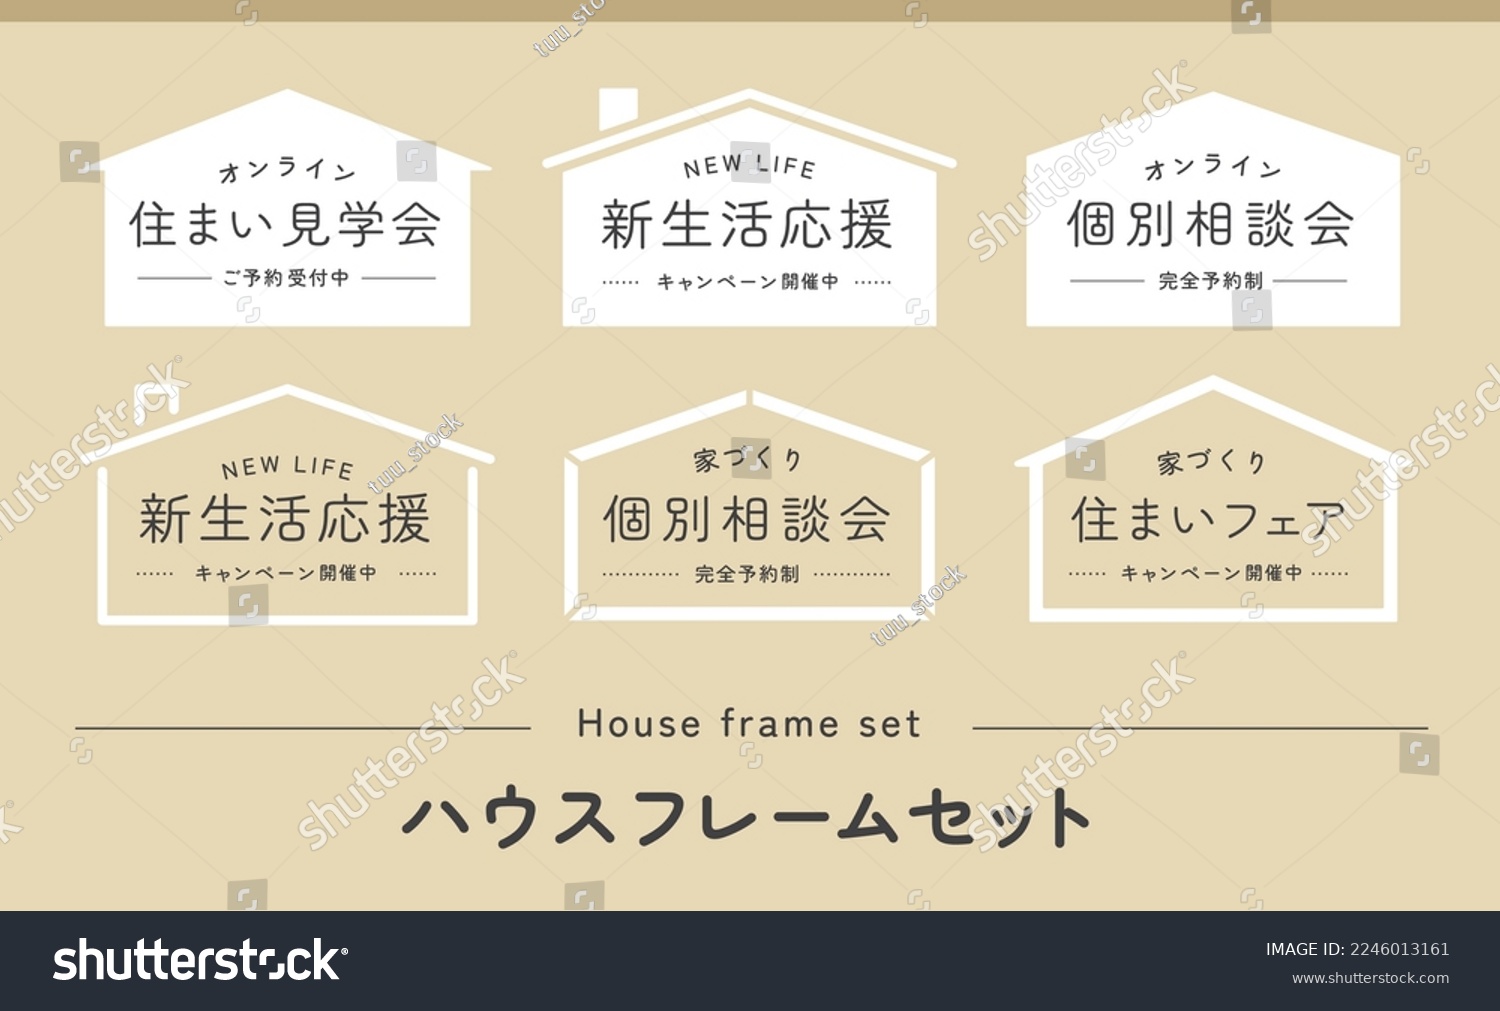 SVG of House frame set. New Life, Home, Living.  (Translation of Japanese text: 